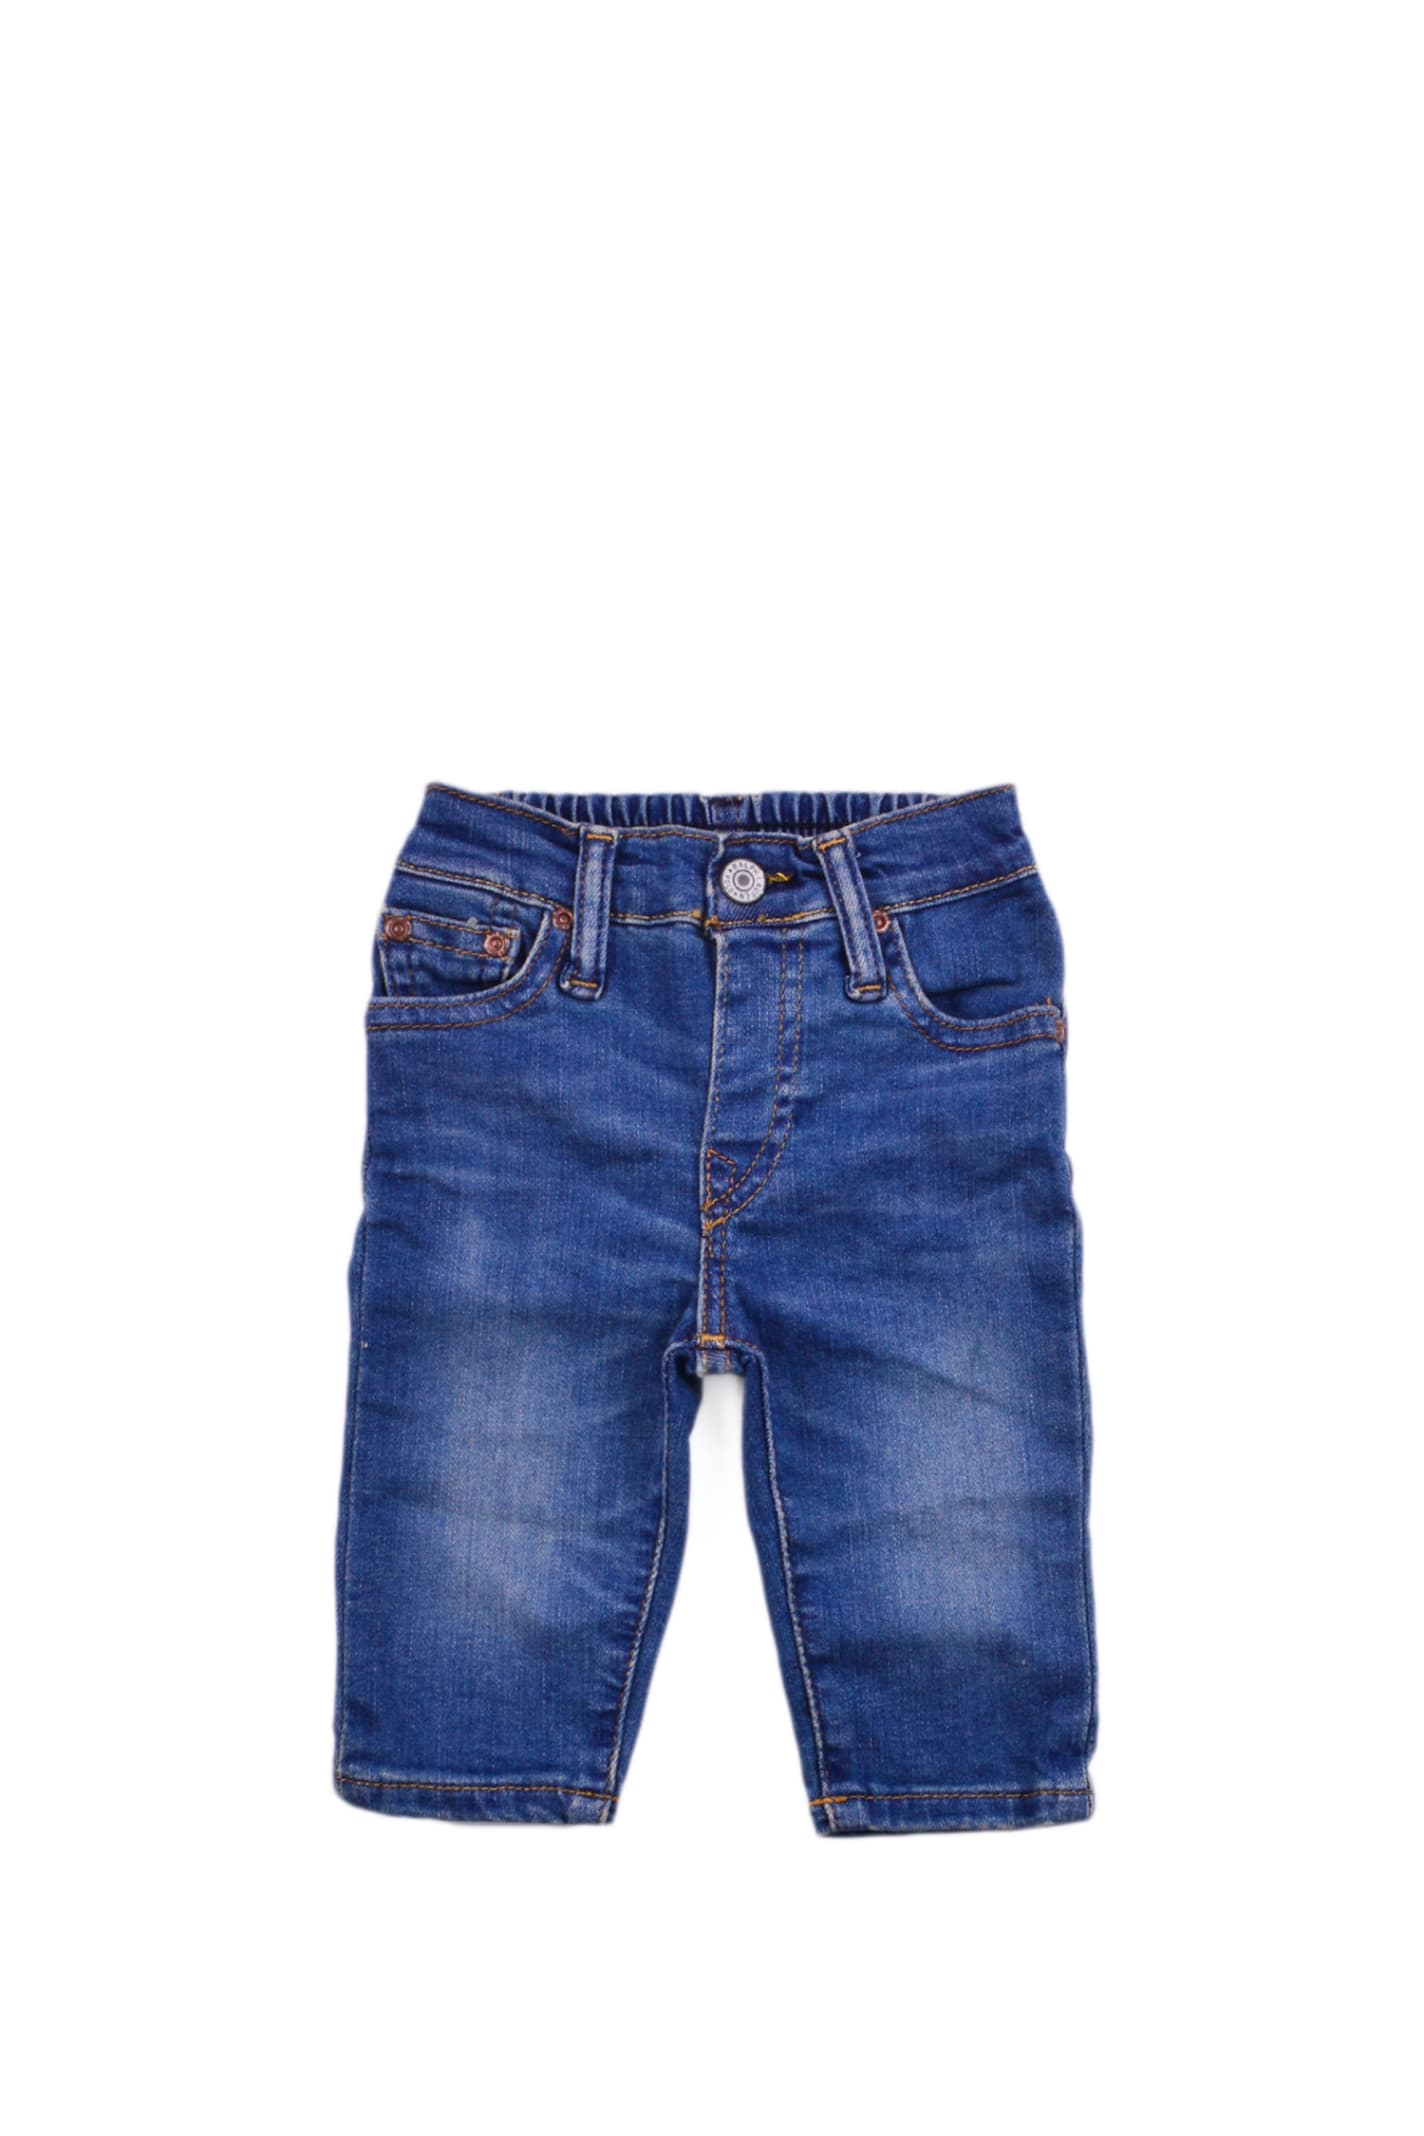 Ralph Lauren Cotton Denim Jeans